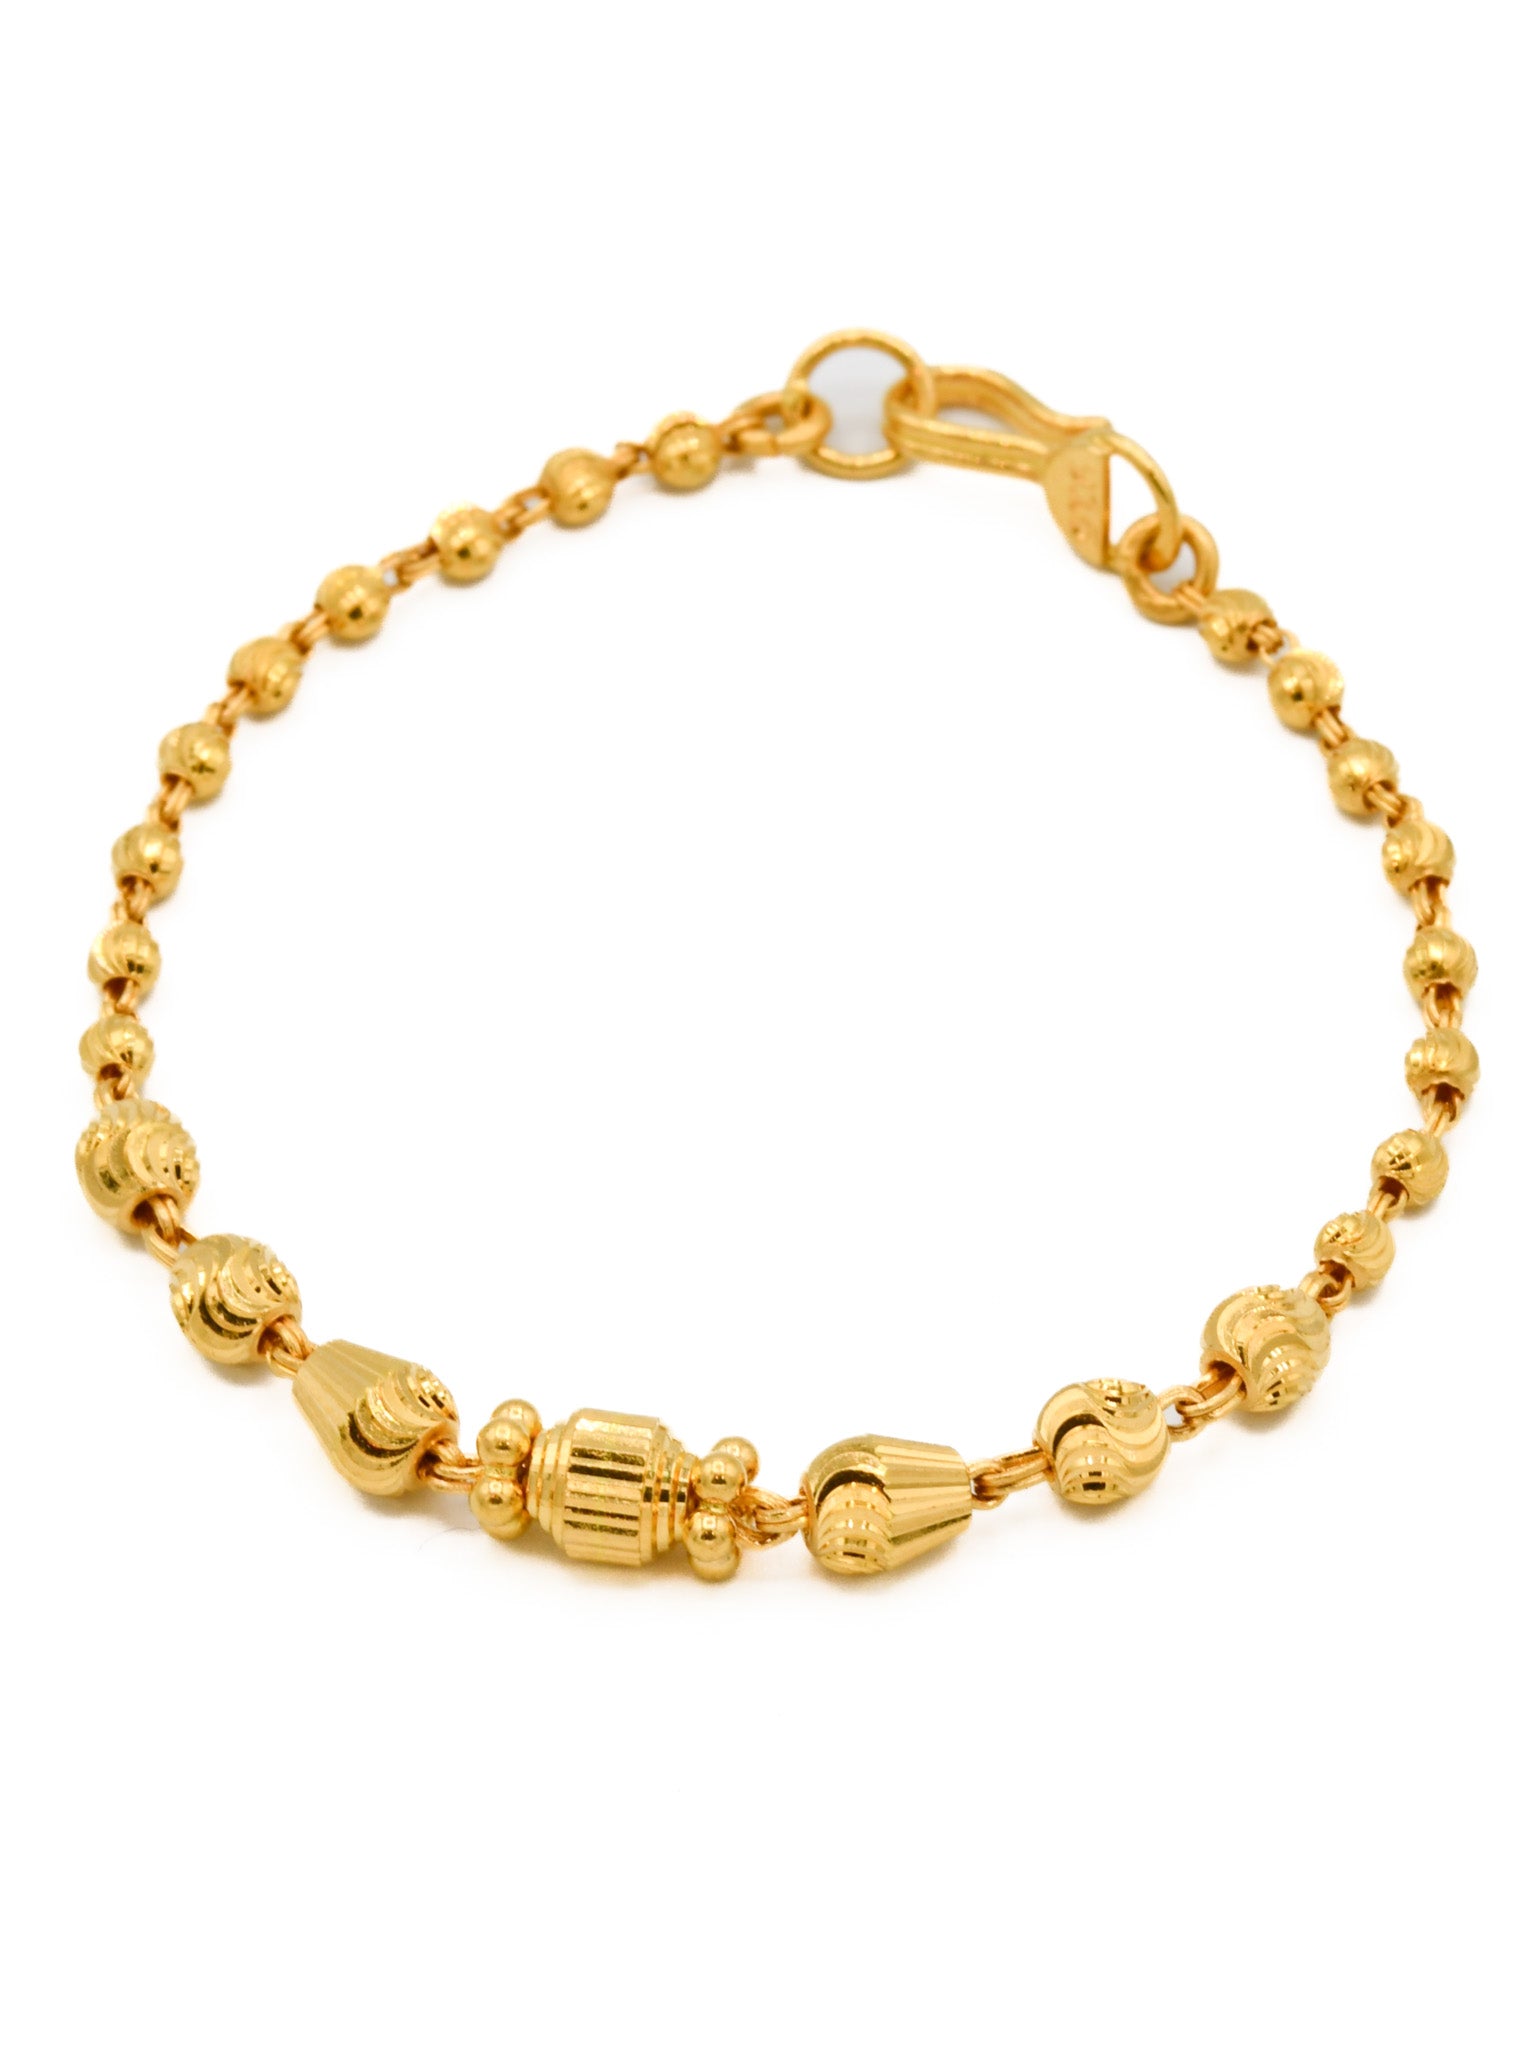 22ct Gold Ball 1 Piece Baby Bracelet - Roop Darshan